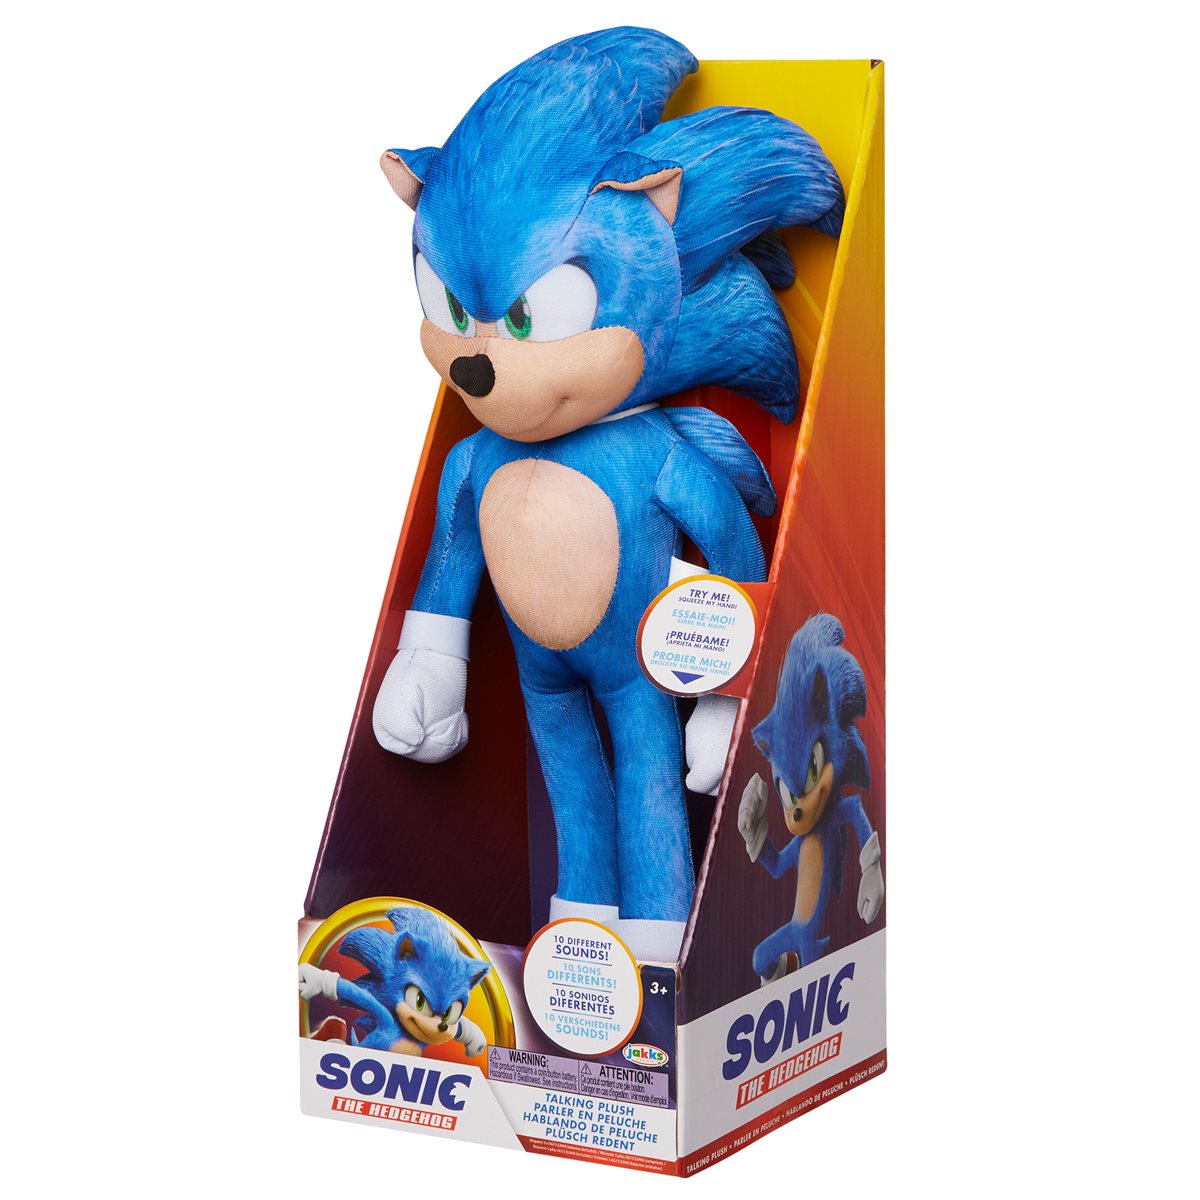 classic sonic the hedgehog plush